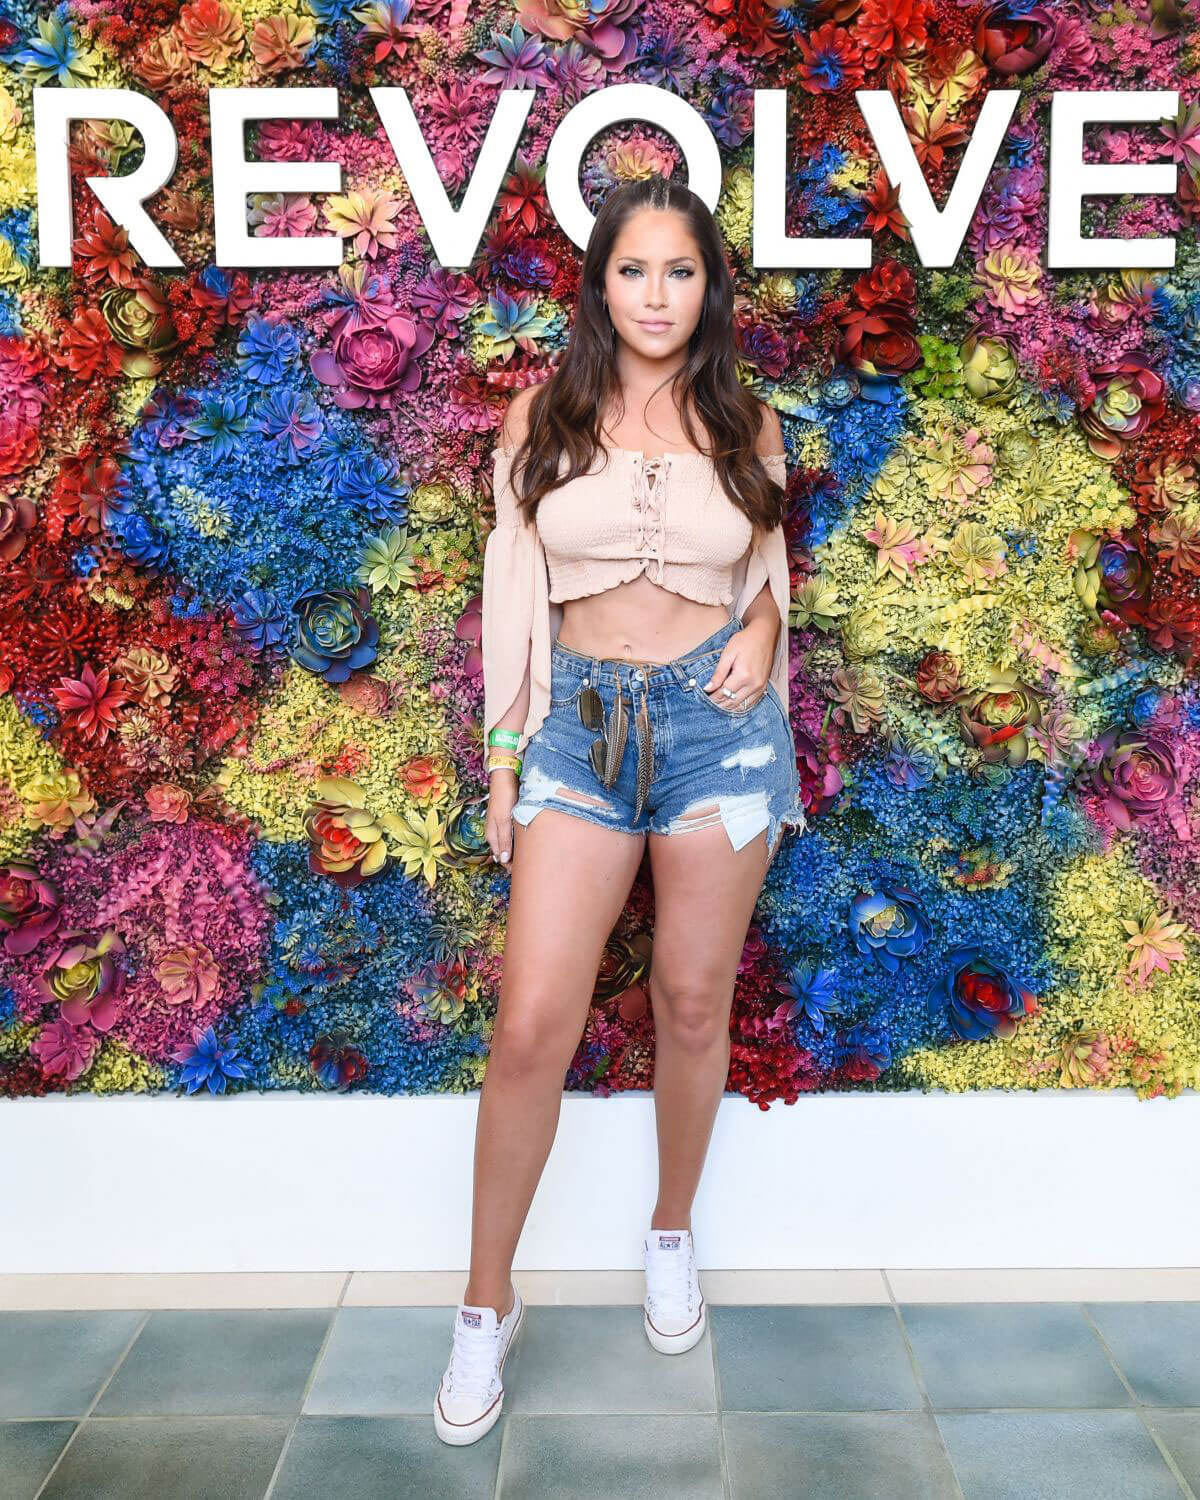 OLIVIA PIERSON at Revolve Desert House at 2017 Coachella in Indio